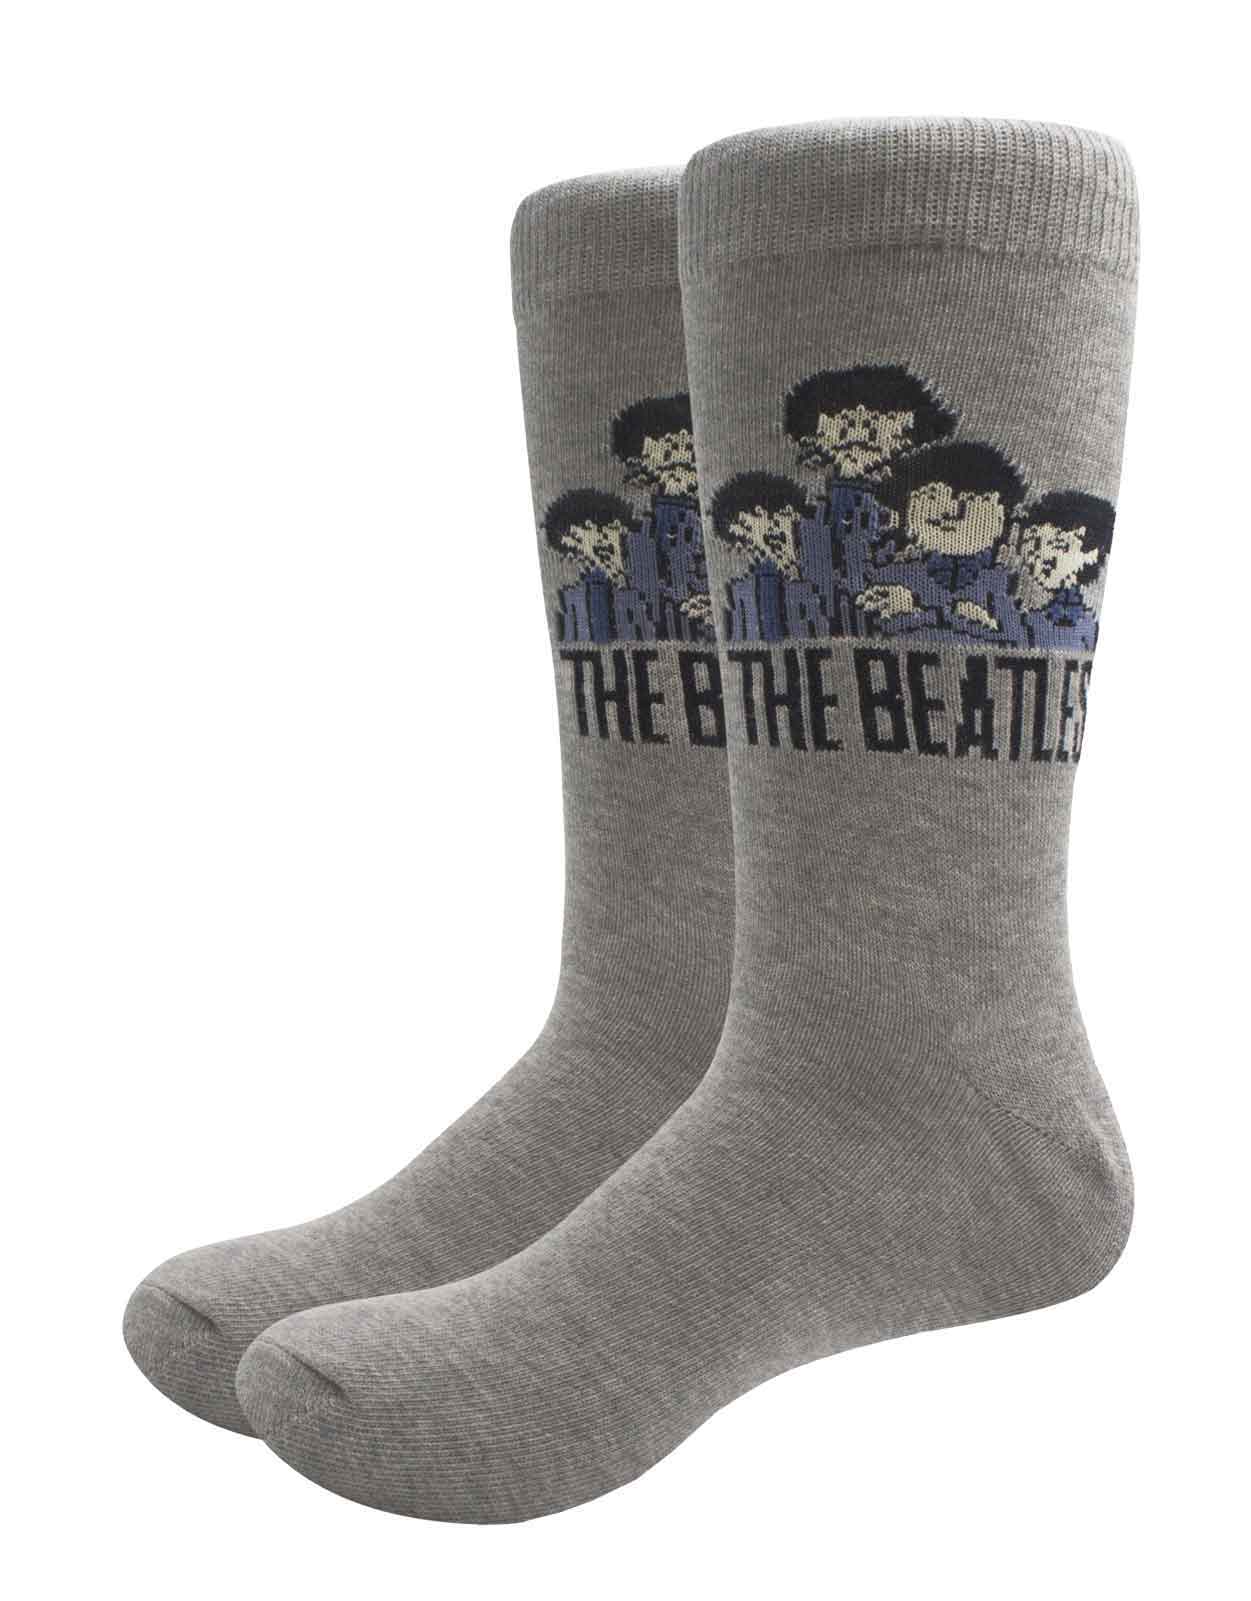 The Beatles Cartoon Group Socks